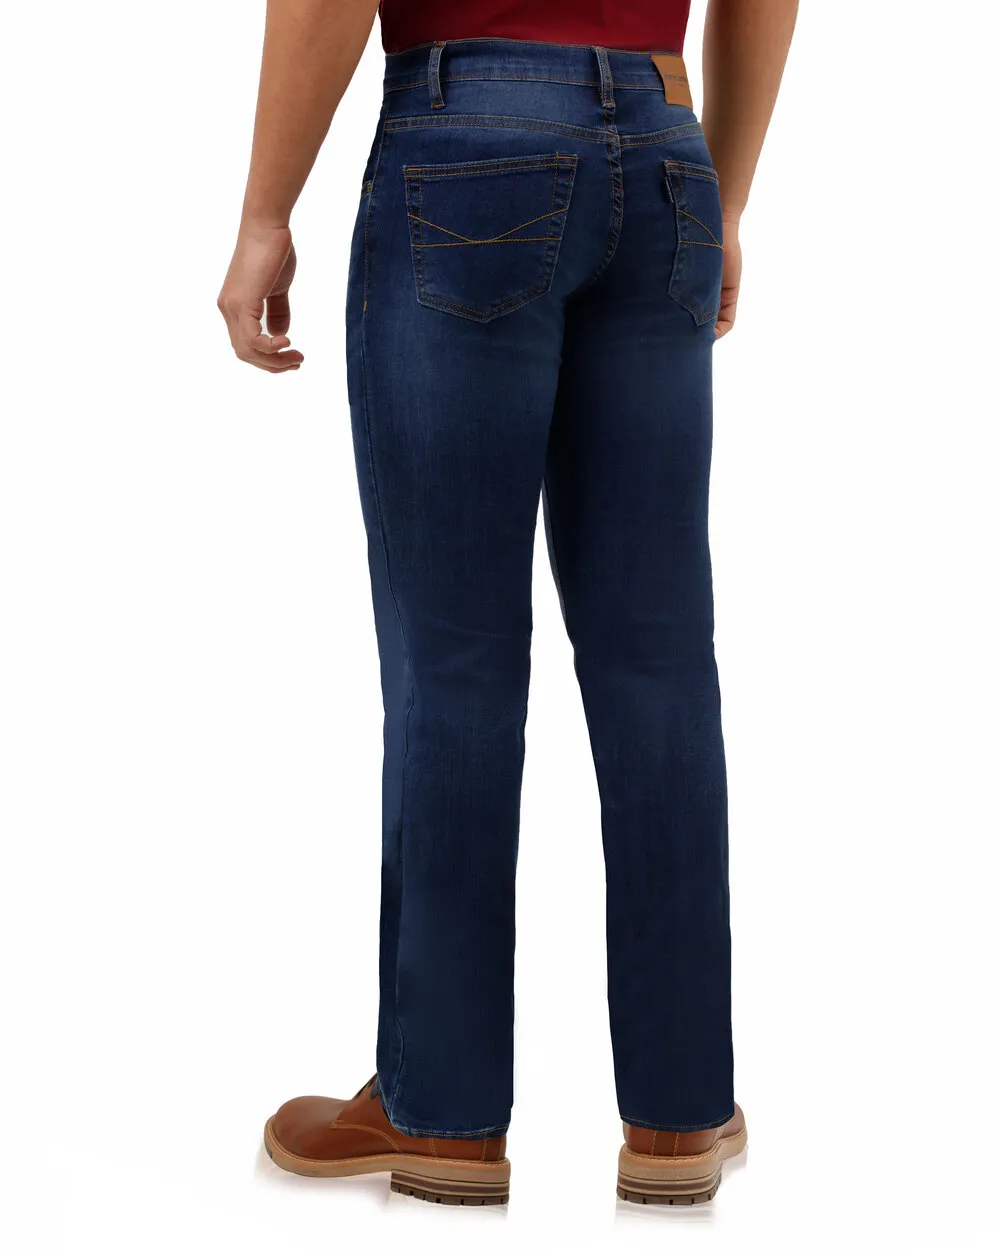 Jeans 711 slim fit stretch azul